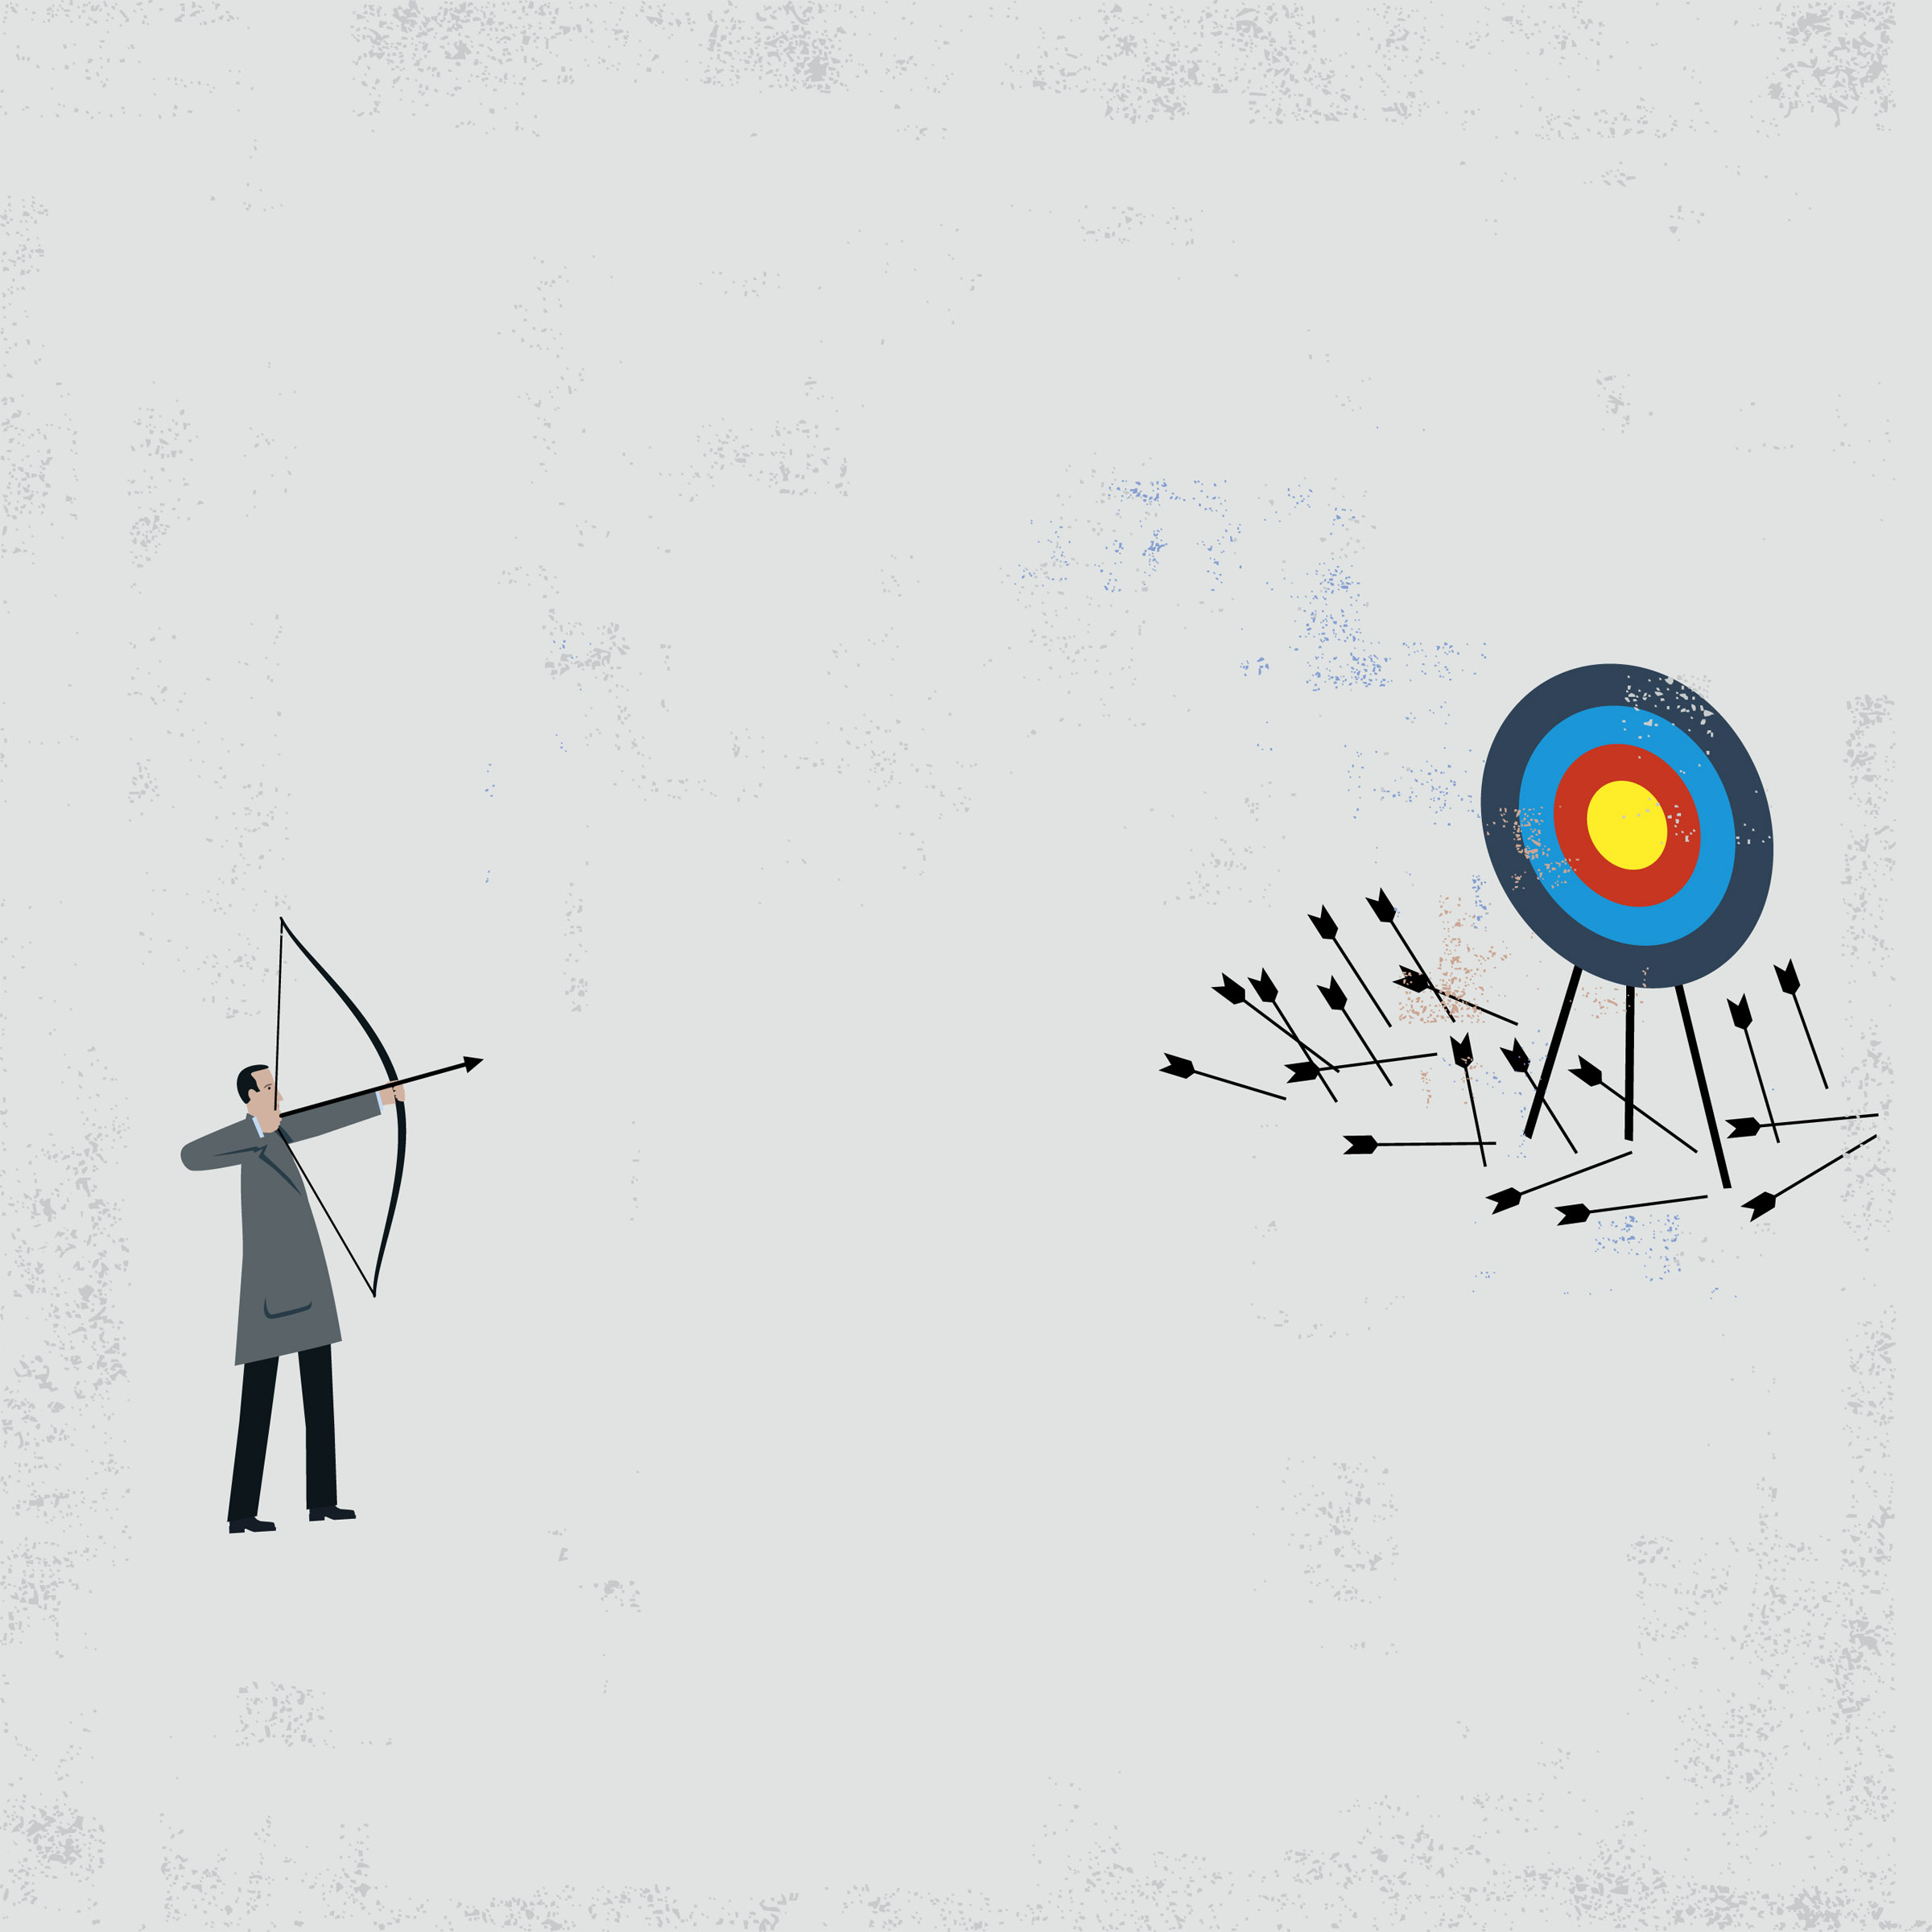 Missing Archery Target Illustration - iStock - Light-Core